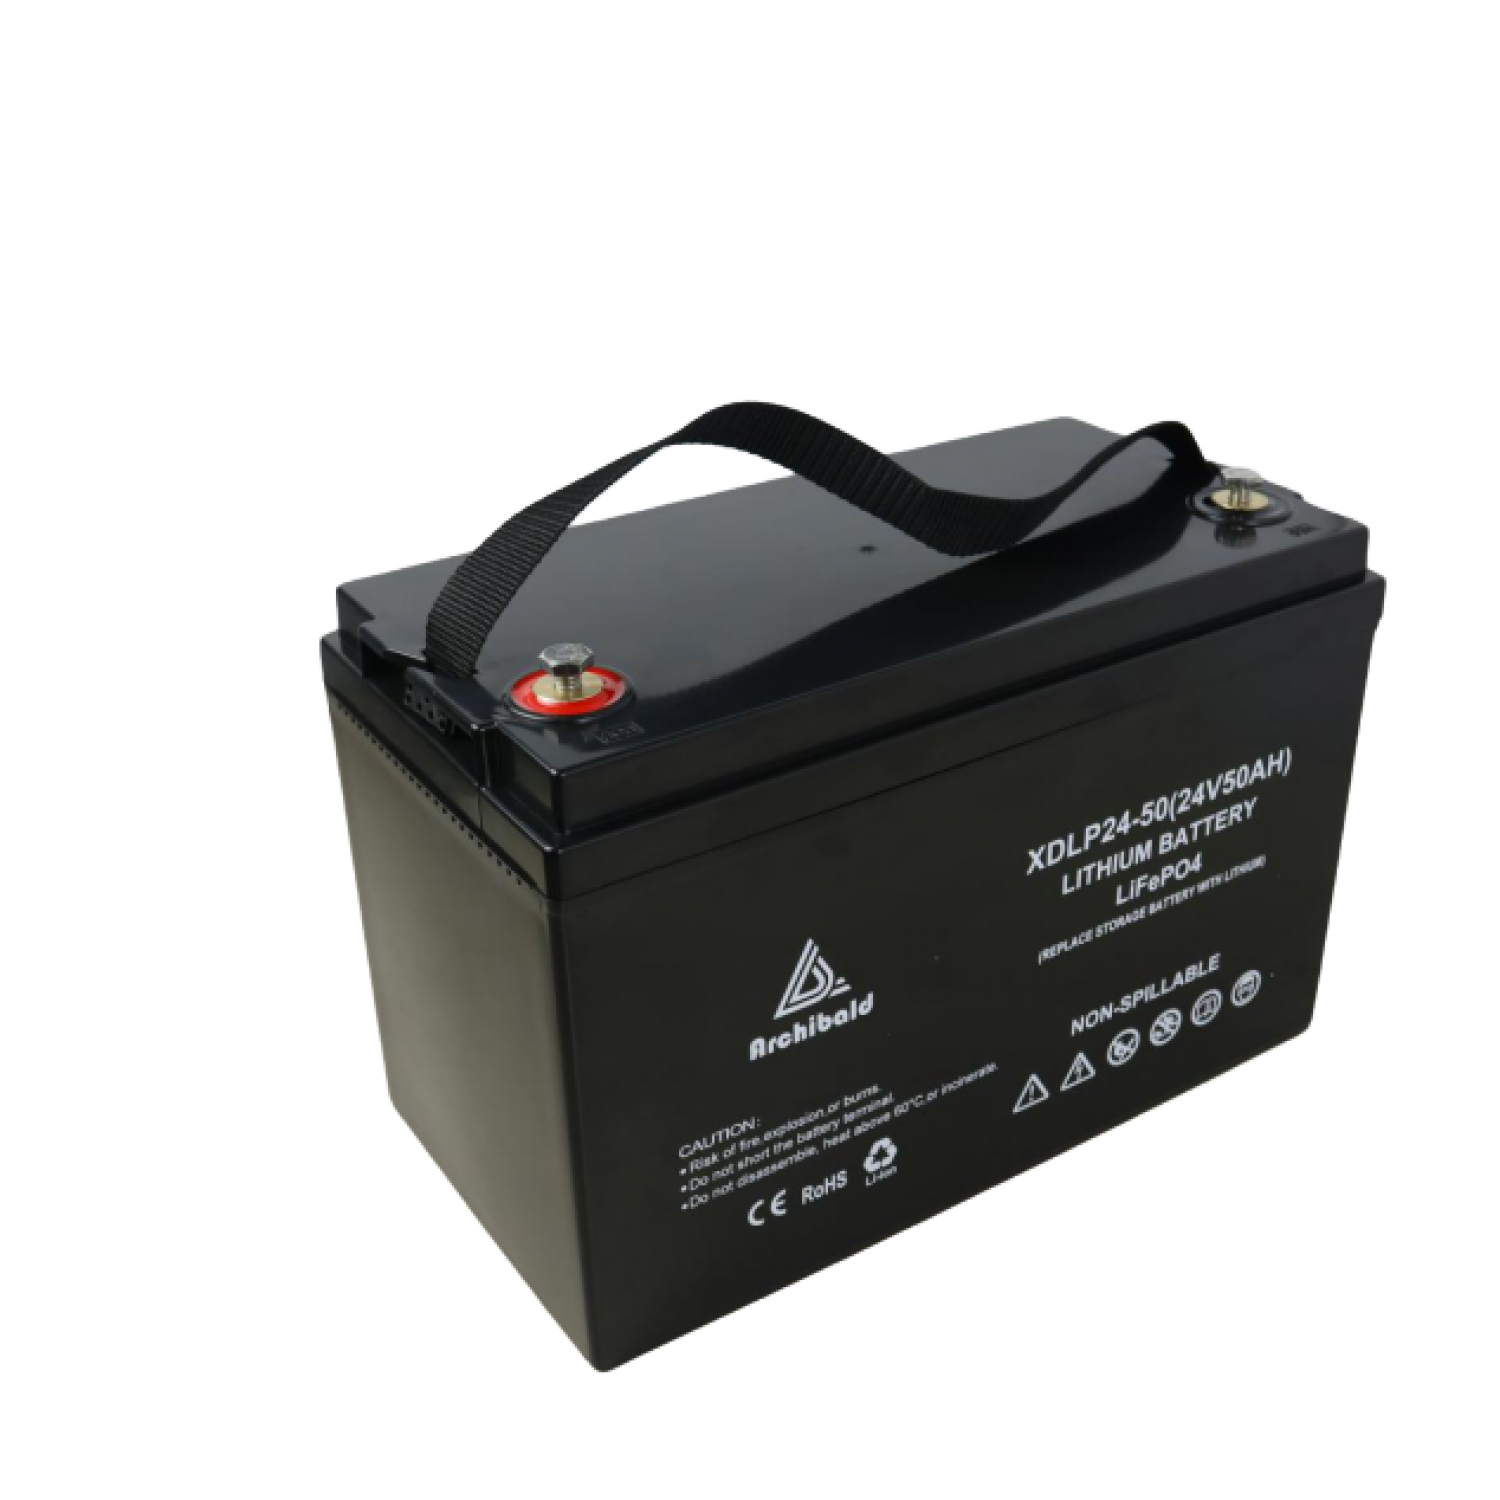 24V 50AH Lifepo4 Lithium Battery Pack for RVs, Caravans, Motorhomes